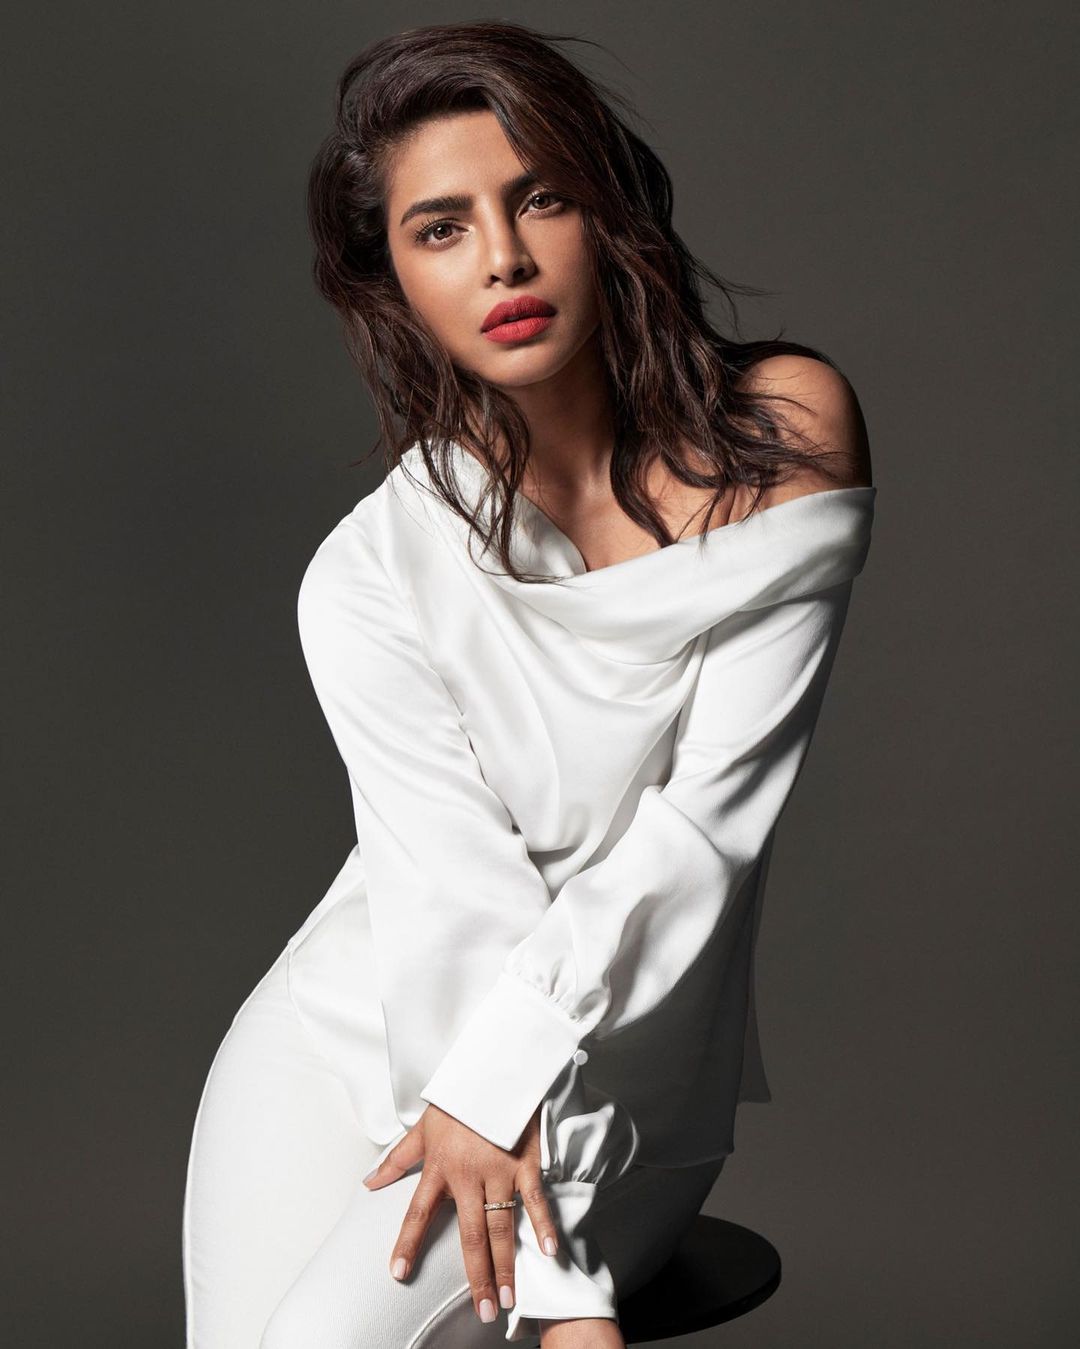  Priyanka Chopra looks elegant in the white ensemble. (Image: Instagram)